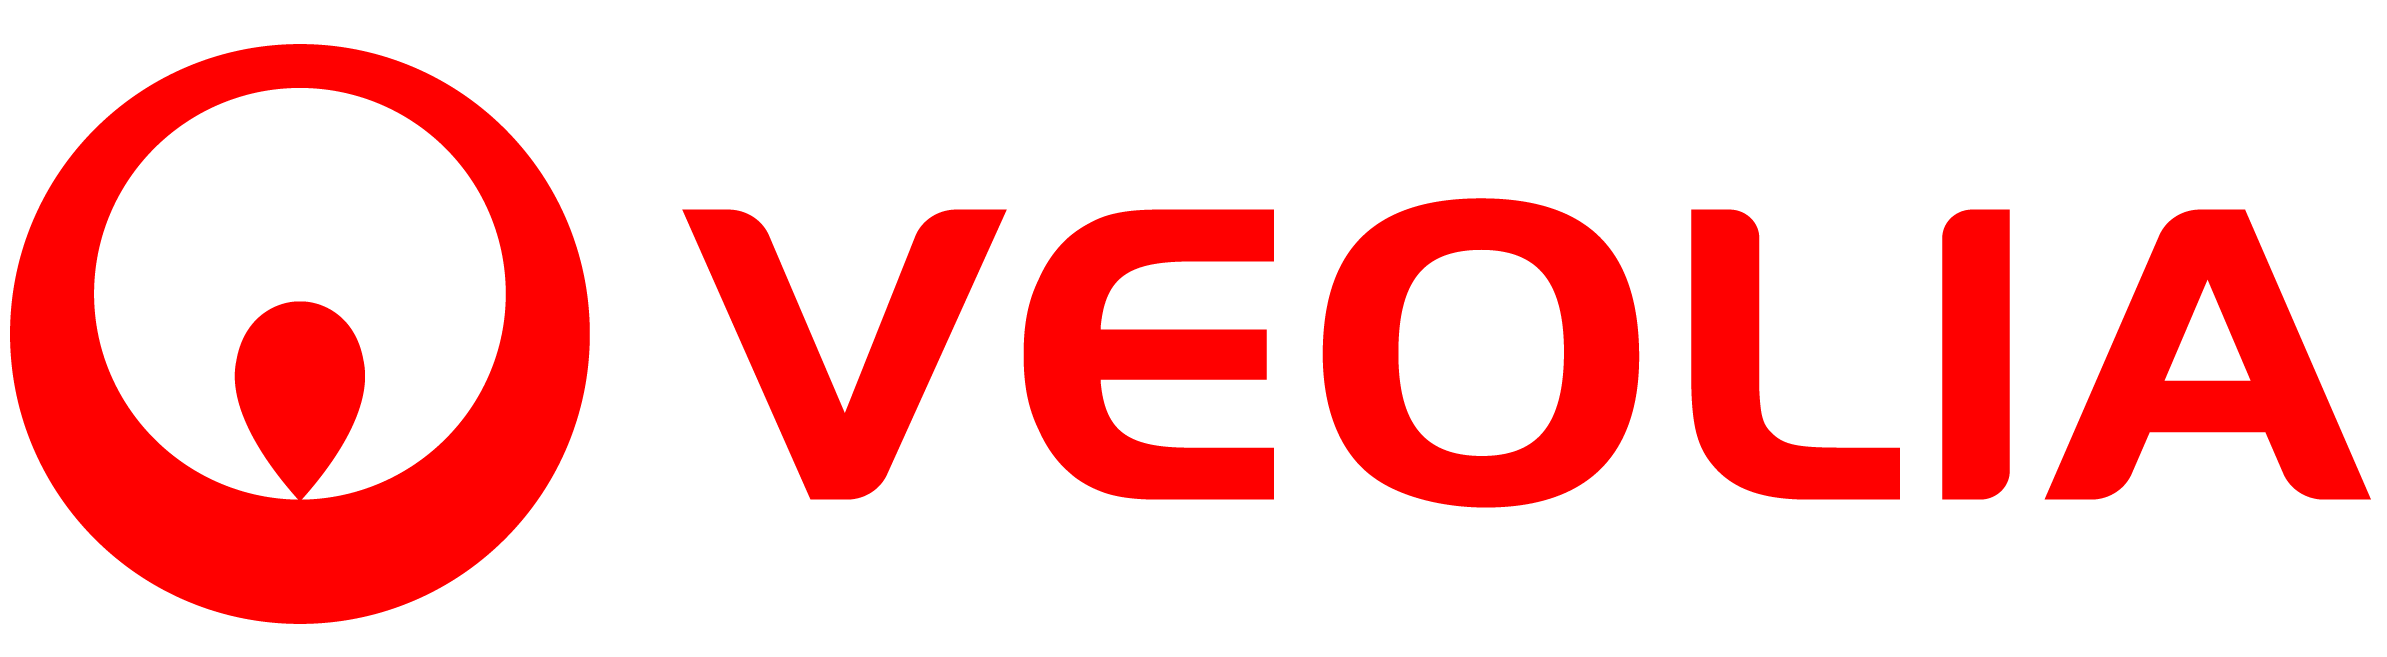 veolia logo